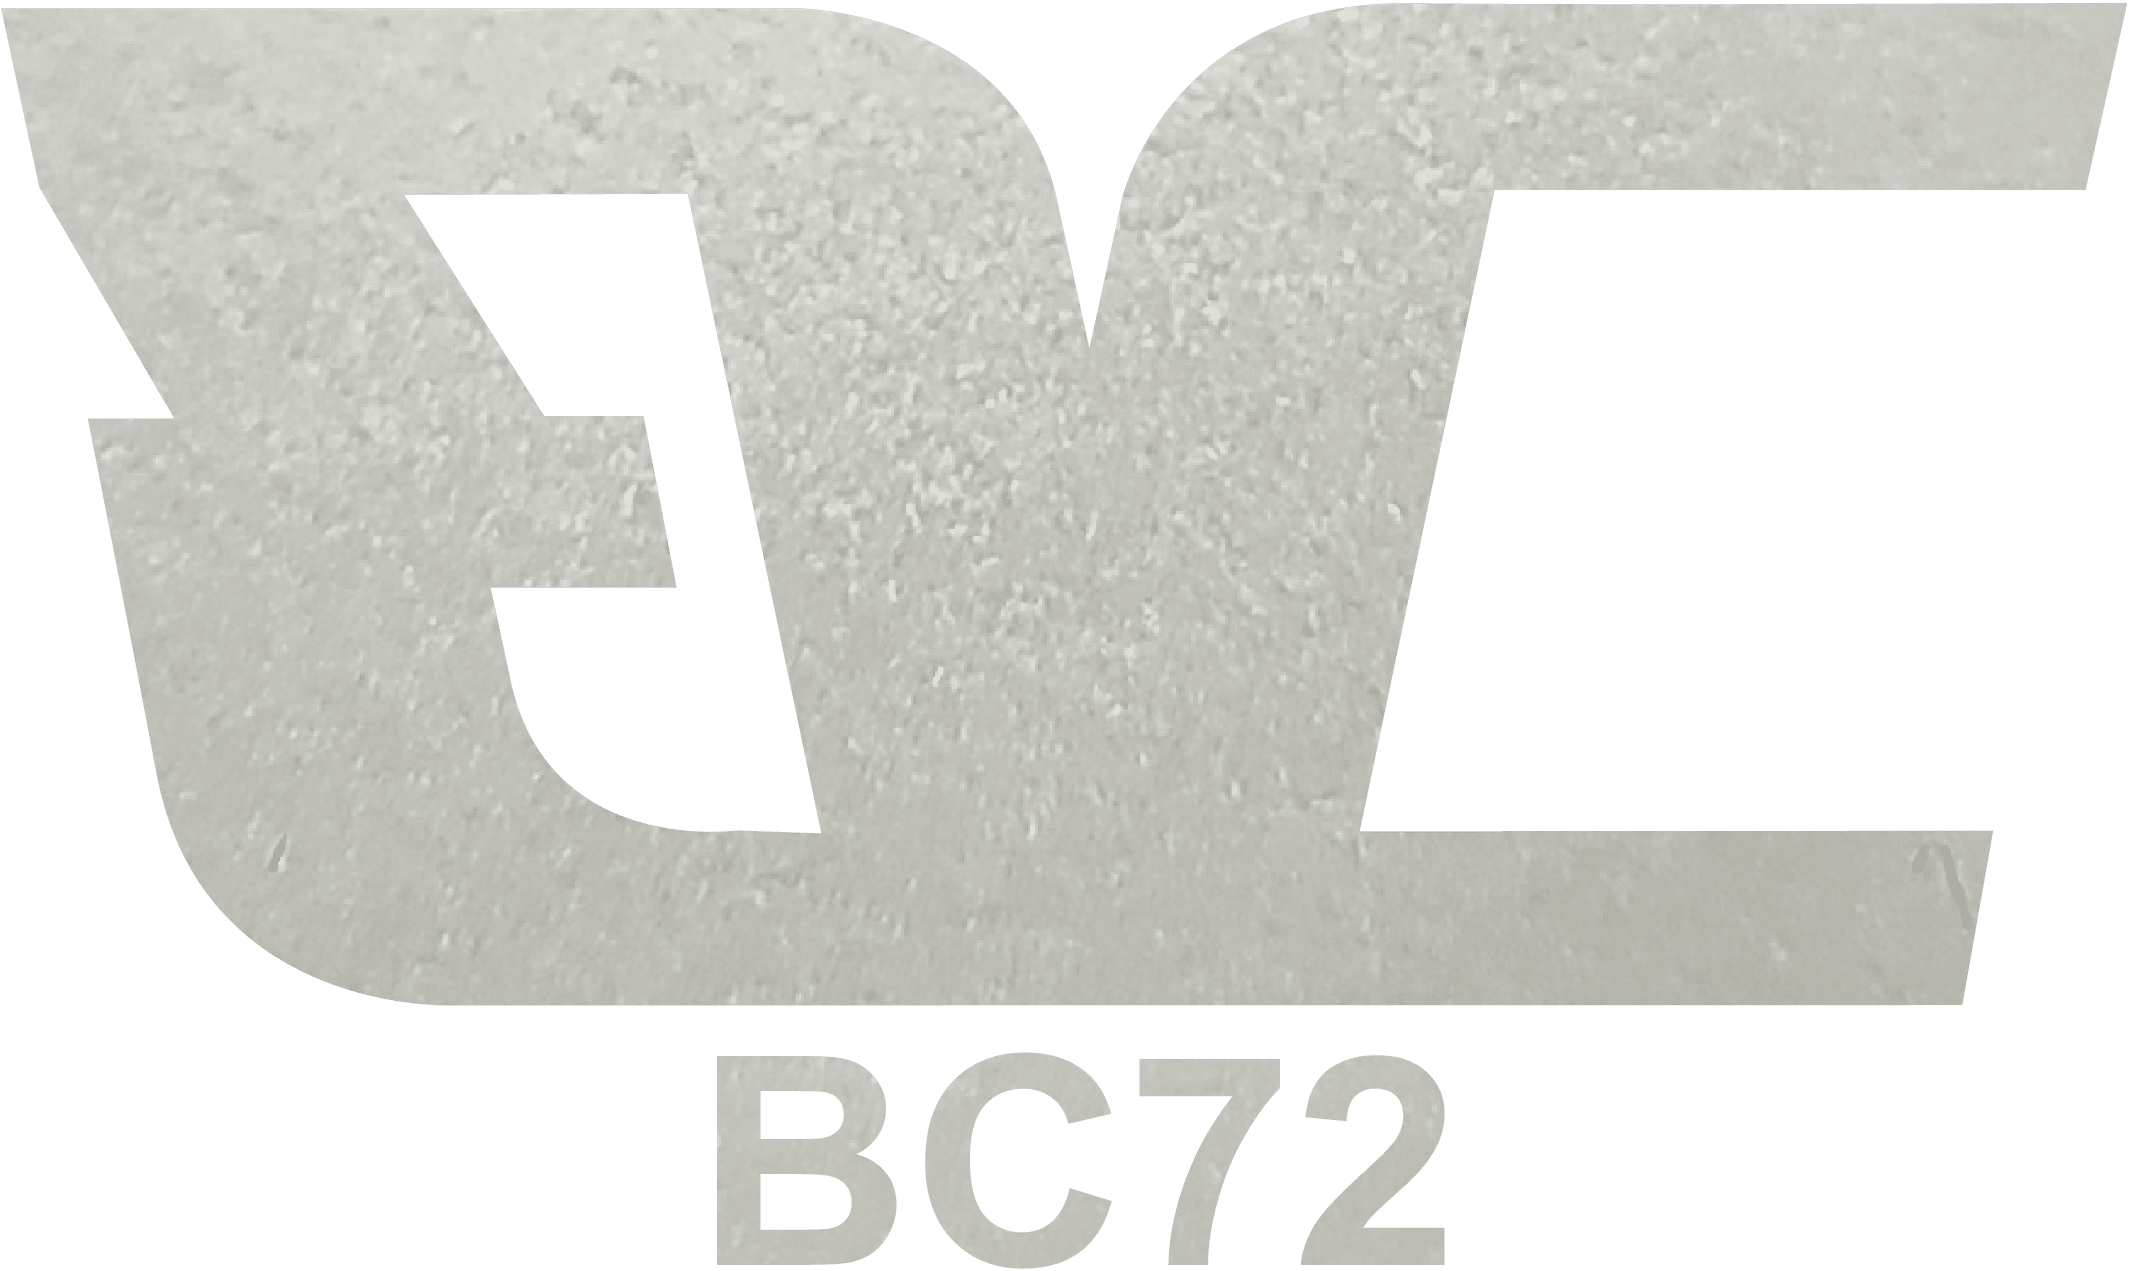 Foil Stamping - BC72 - Pearl Foil Stamping